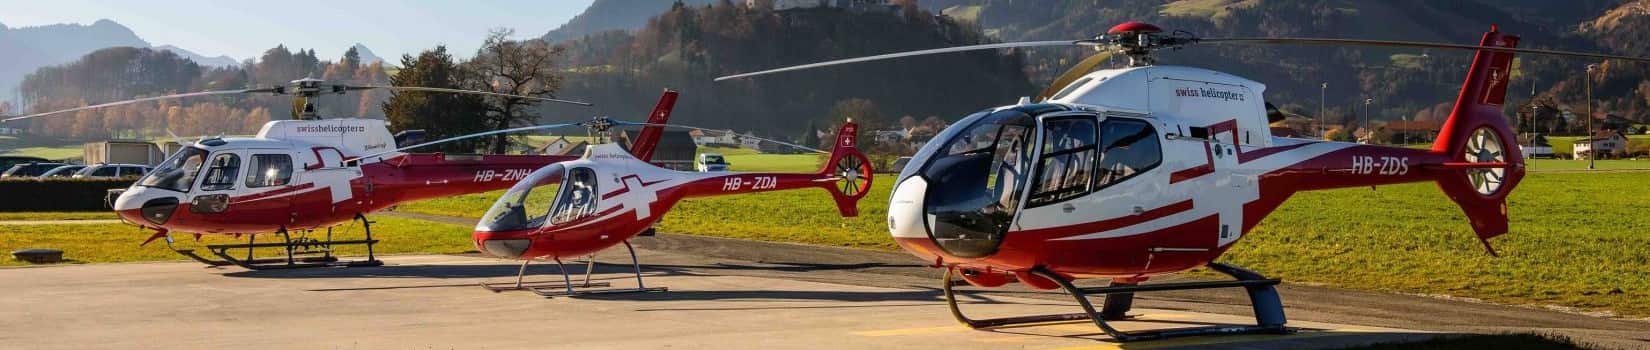 Swiss Helicopter Bern-Belp